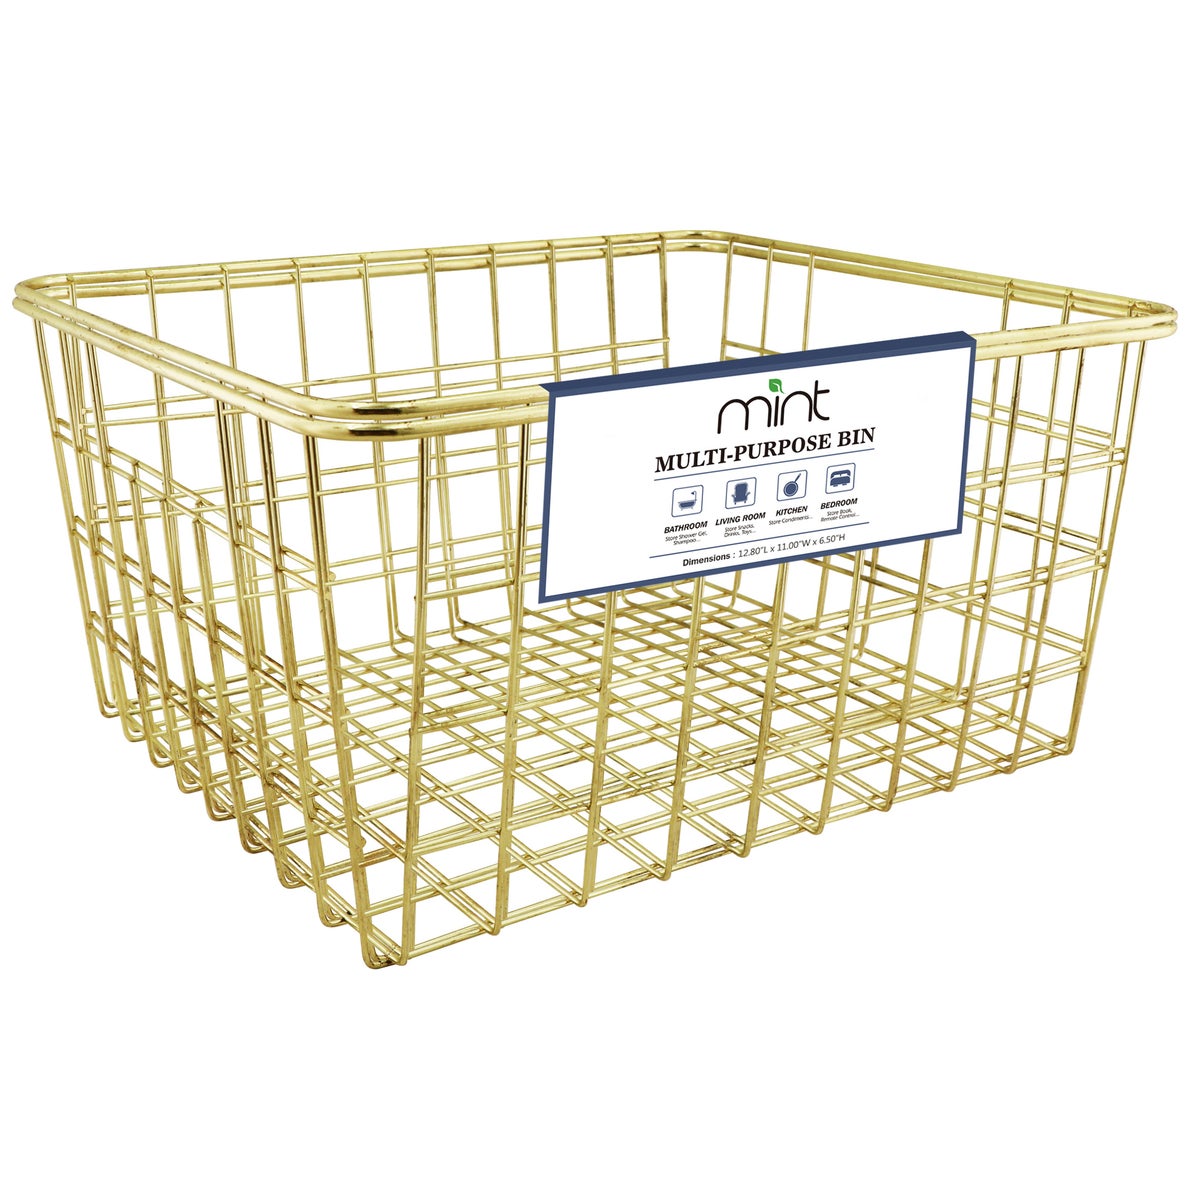 Assorted - Set of 2 Large Nesting Storage Baskets 12.8"x11"x6.5" (6sets)